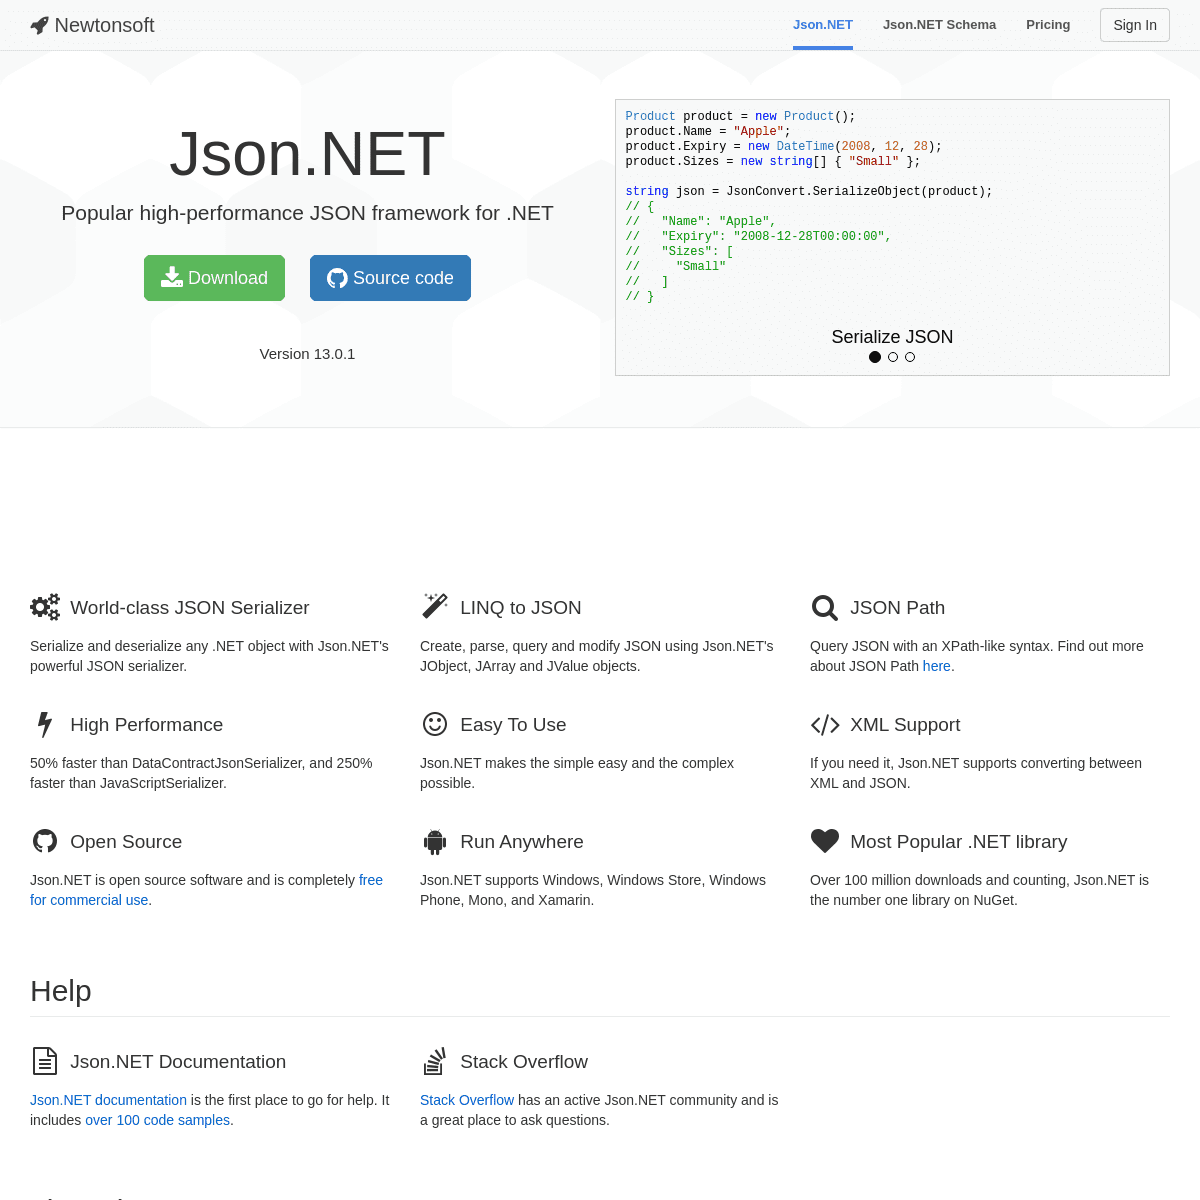 A complete backup of https://newtonsoft.com